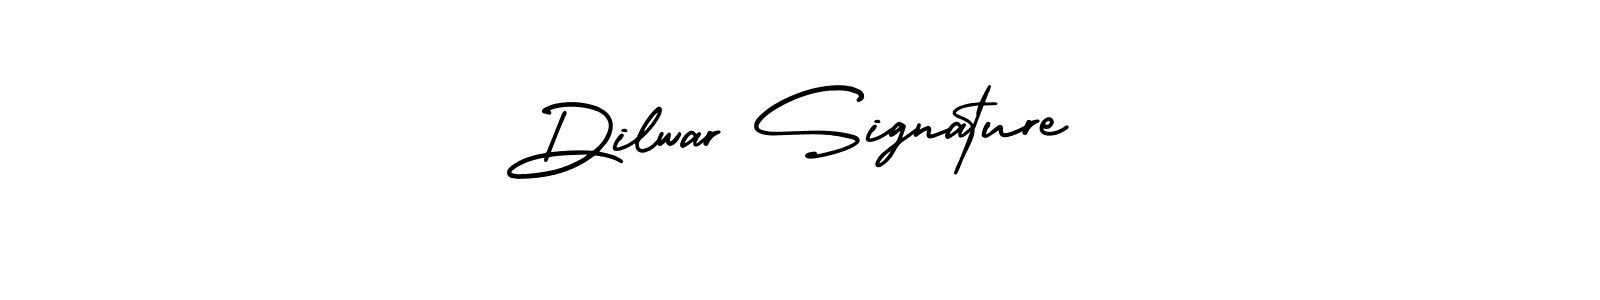 How to Draw Dilwar Signature signature style? AmerikaSignatureDemo-Regular is a latest design signature styles for name Dilwar Signature. Dilwar Signature signature style 3 images and pictures png